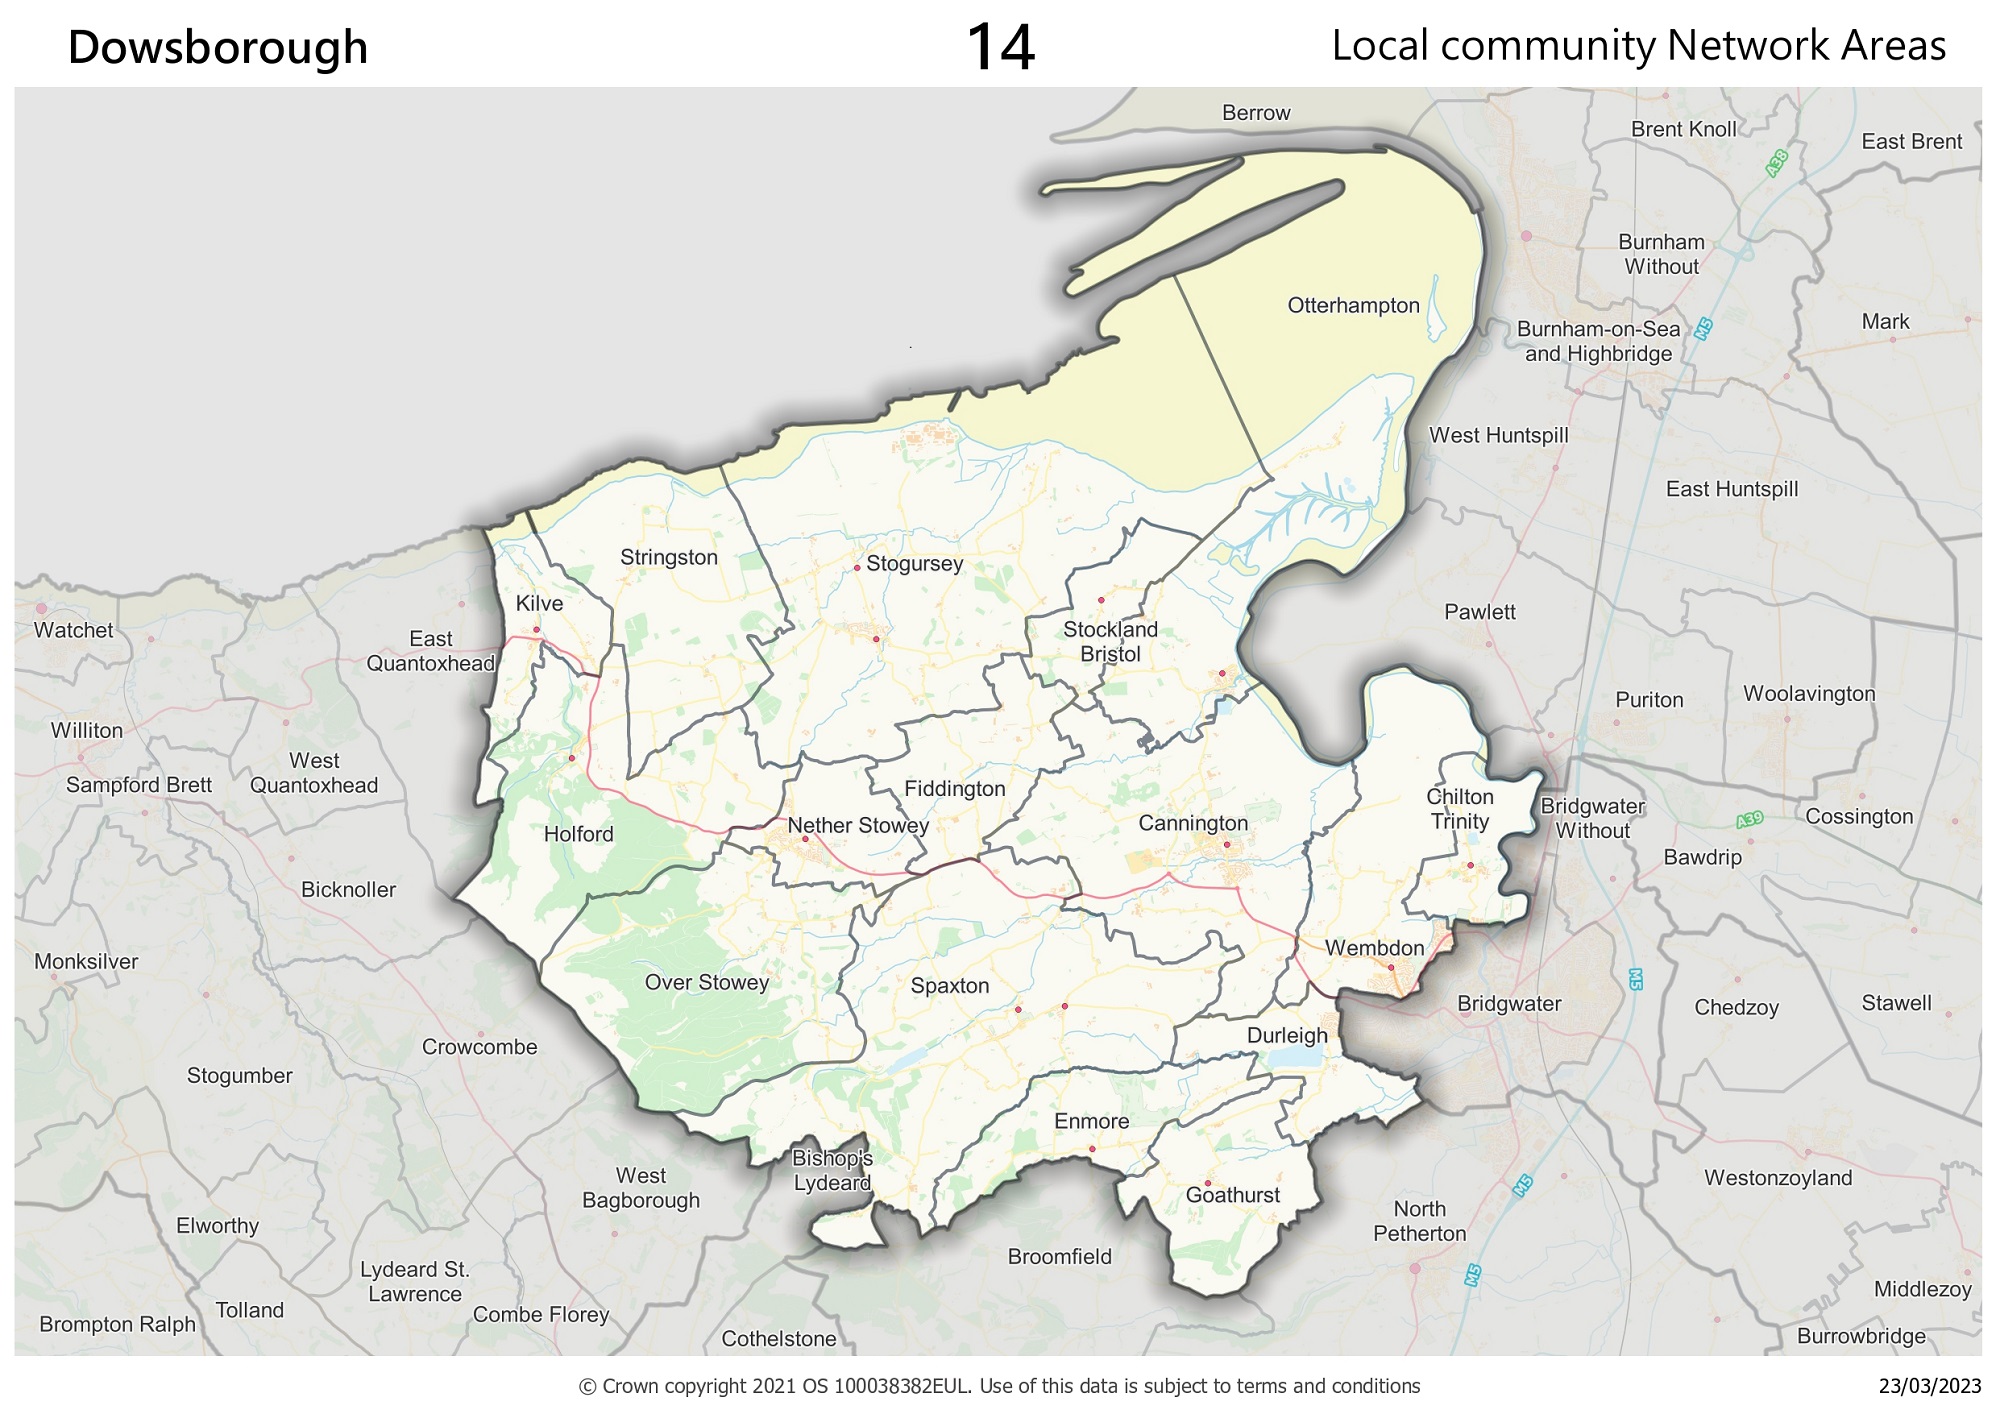 Dowsborough local community network area map